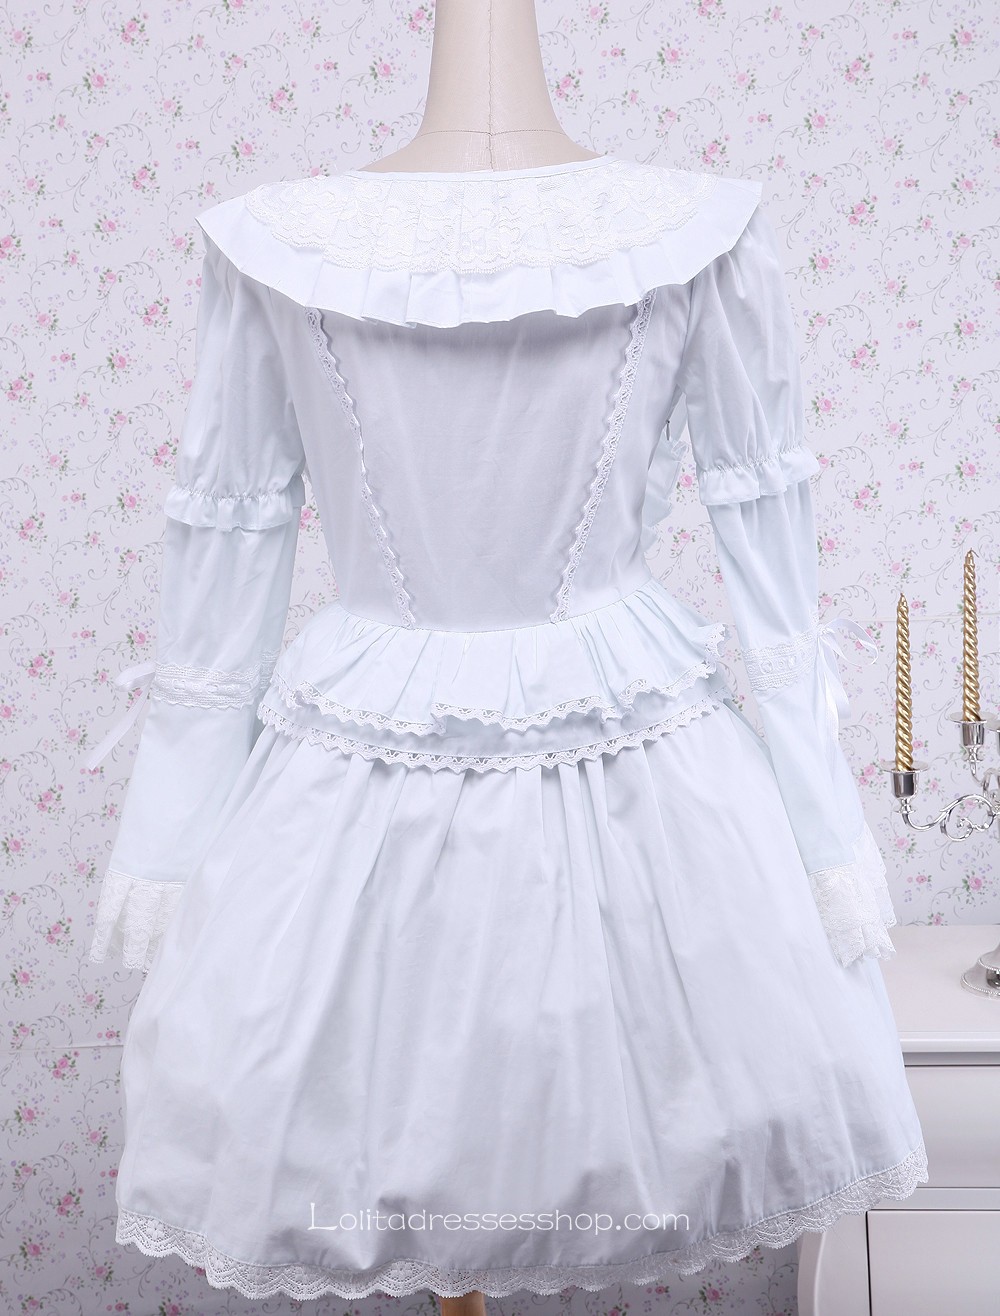 White Cotton Ruffles Bow Square Neck Gothic Lolita Dress